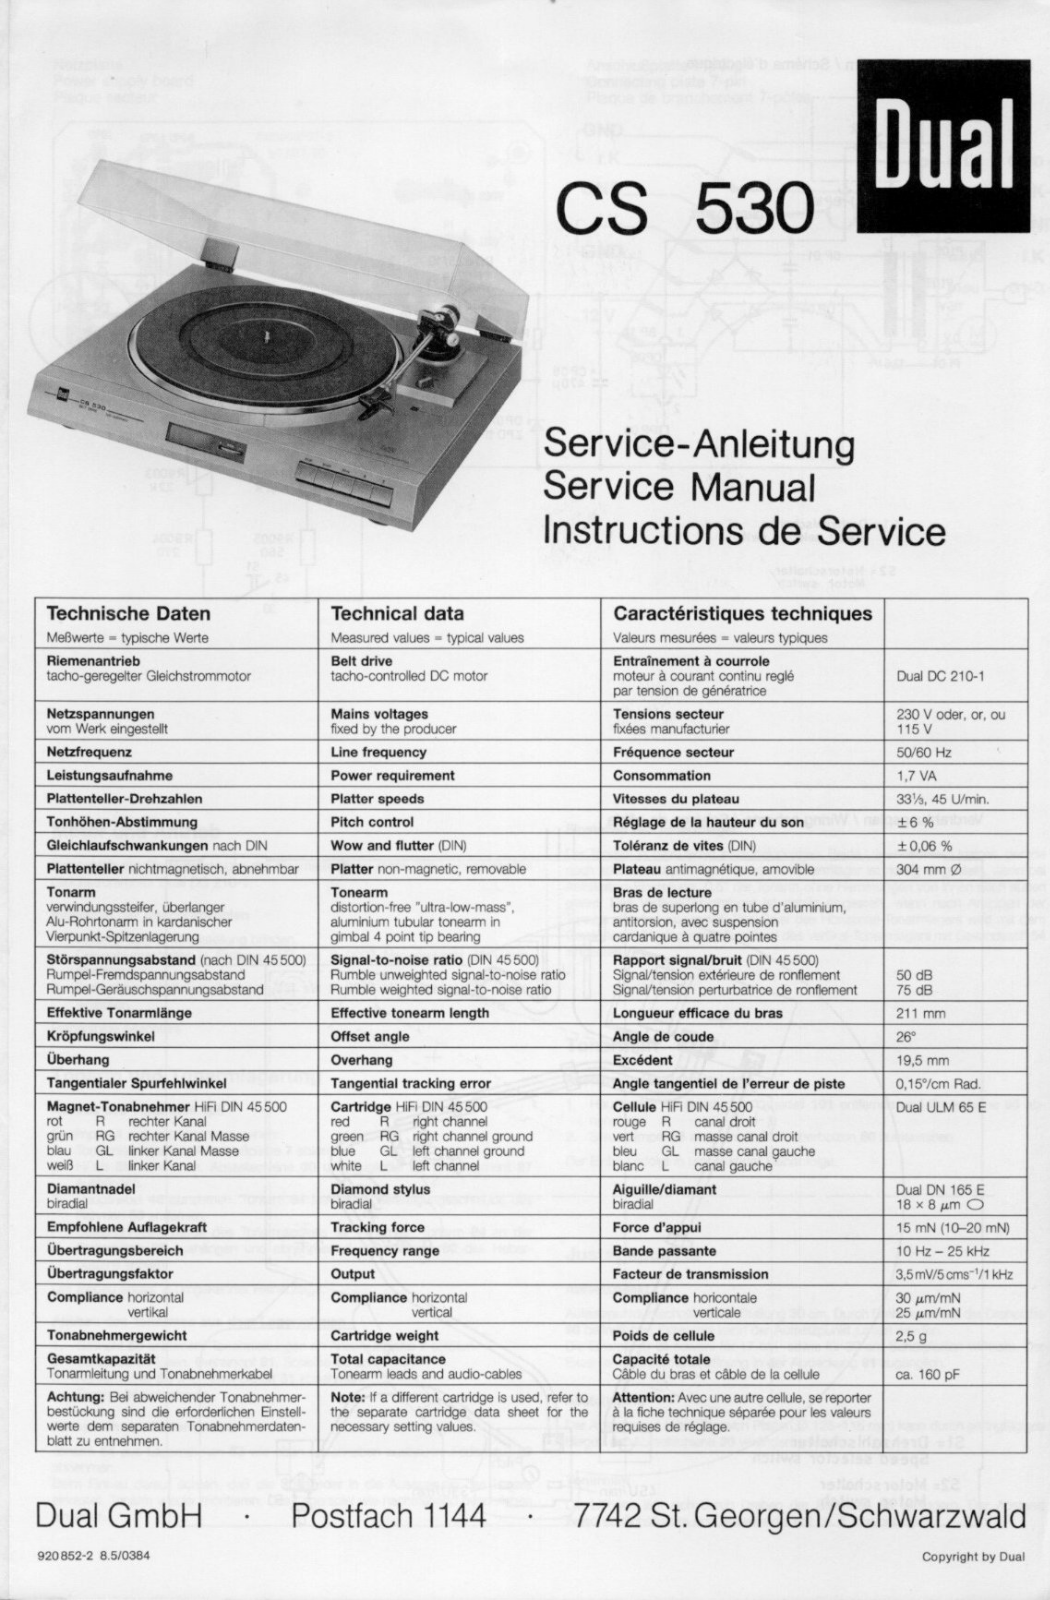 Dual CS-530 Service manual